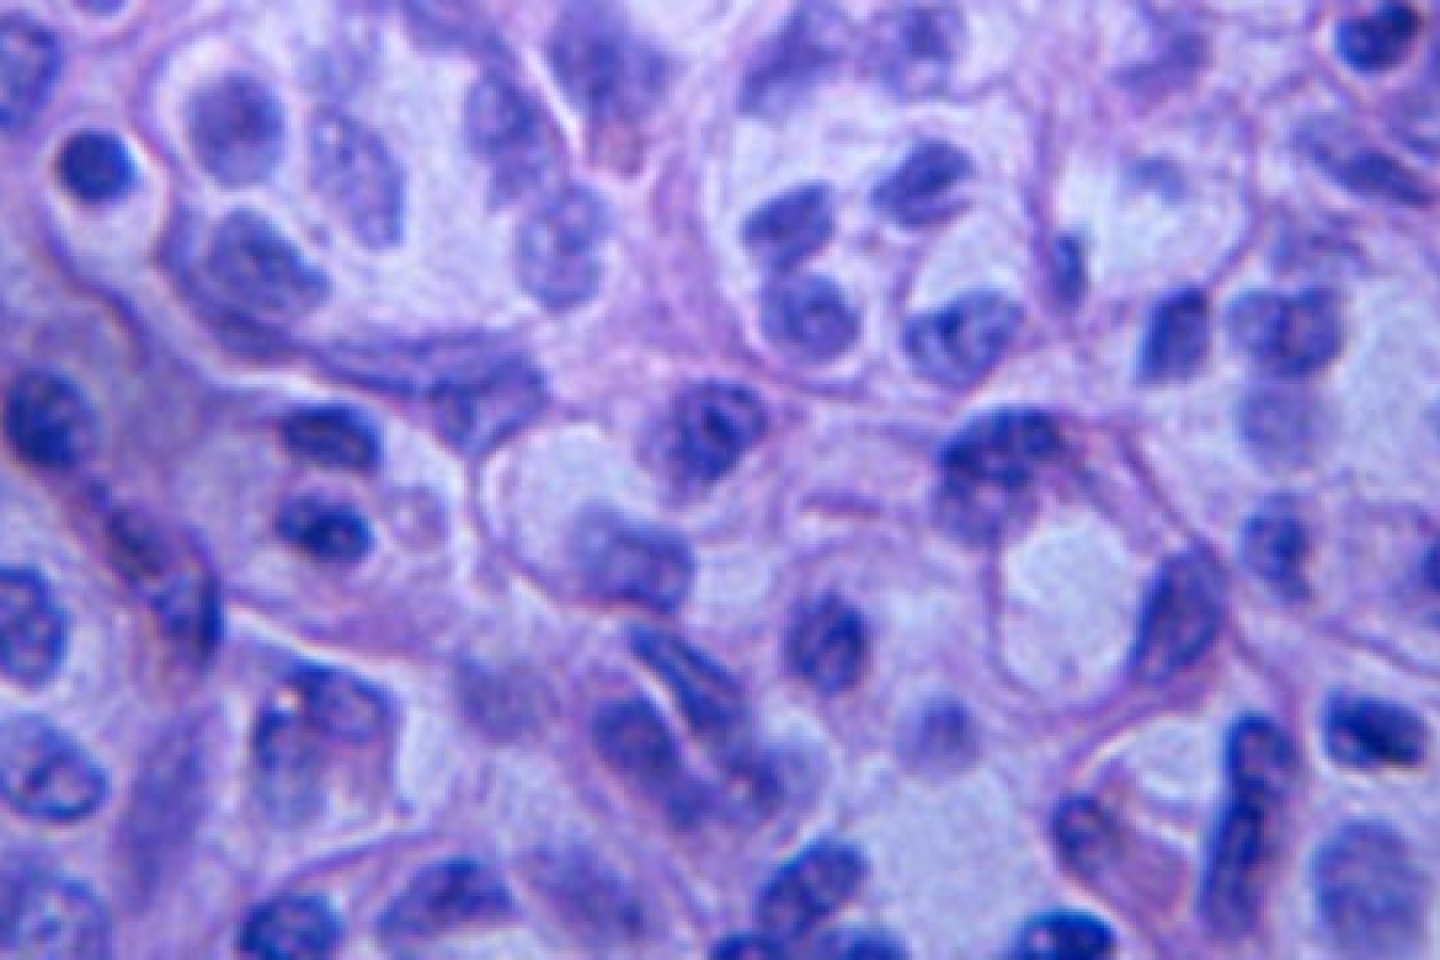 Microscopic Image of Kidney Carcinoma